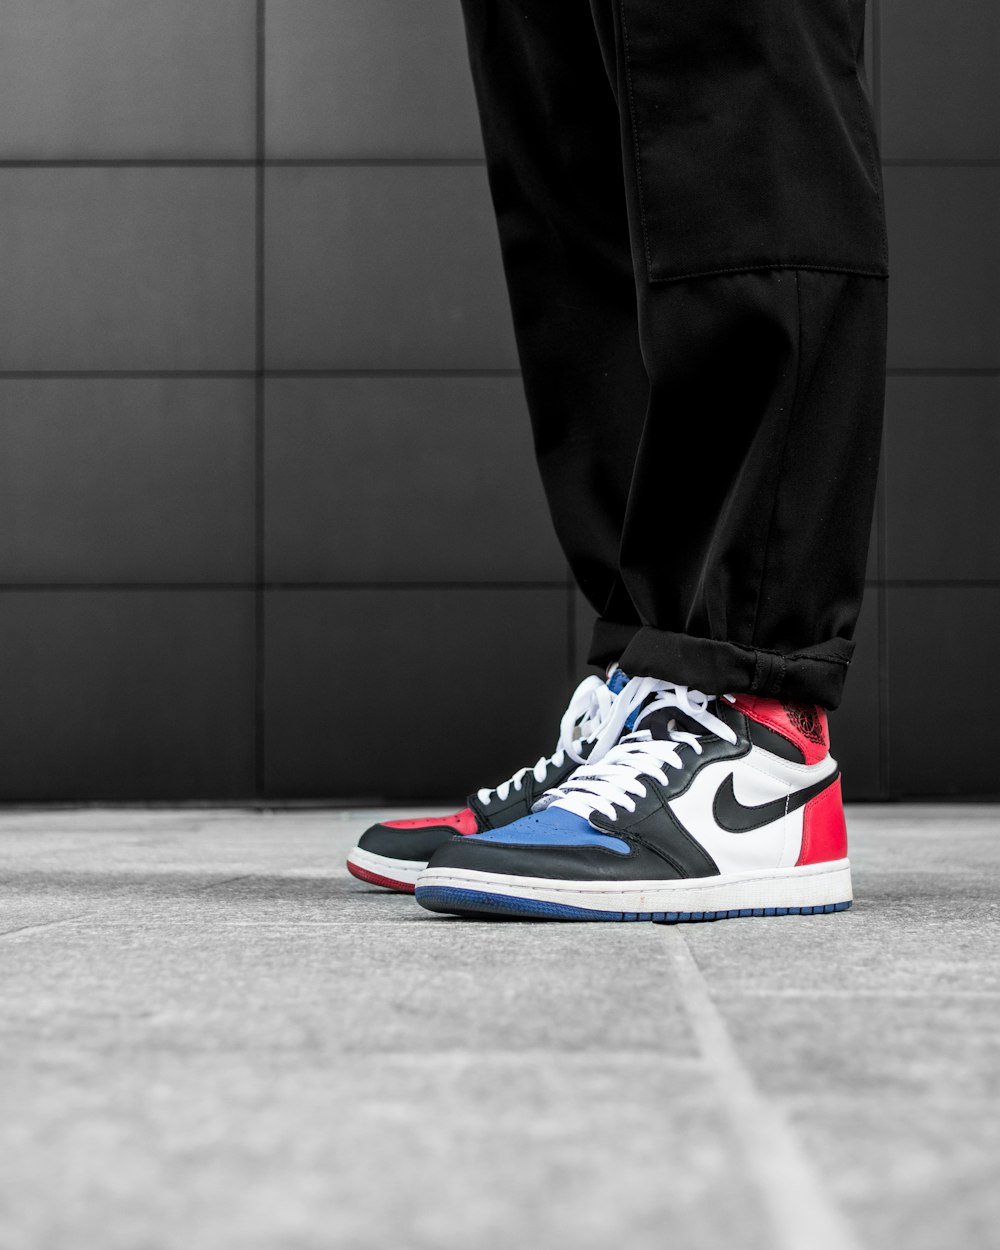 Man blue-red-and-black Nike Air Jordan shoes photo Free Shoe Image on Unsplash